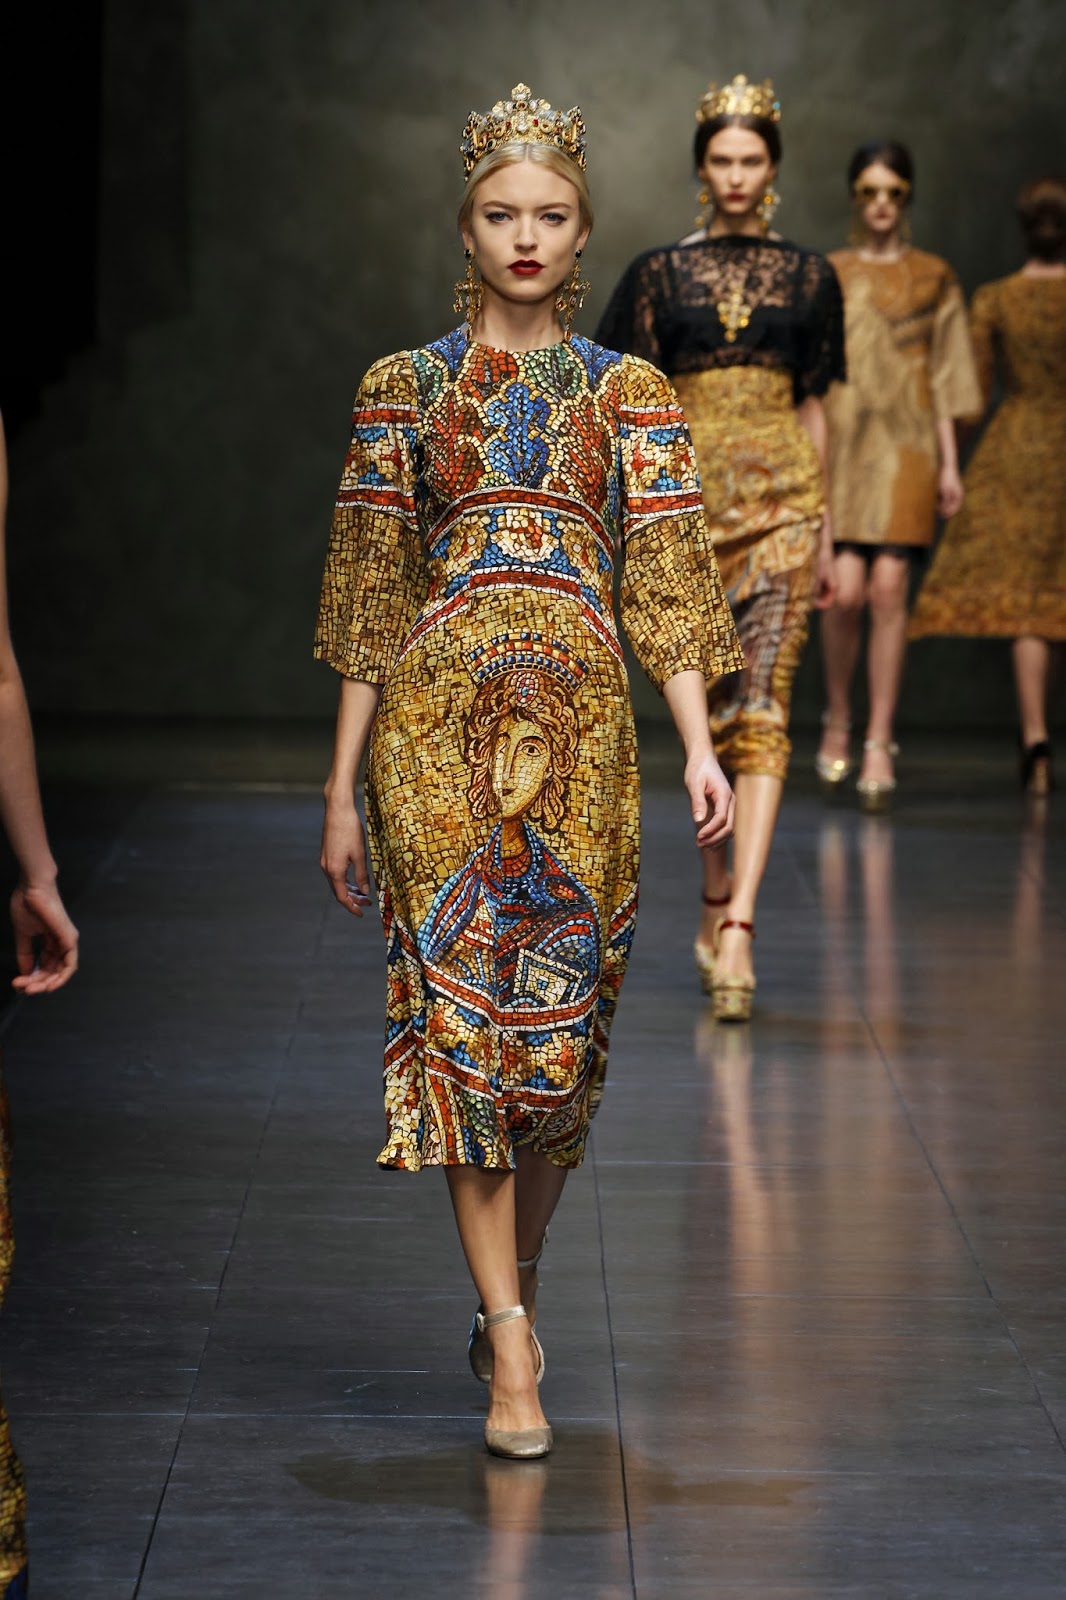 Multimayway: Dolce & Gabbana in Renaissance